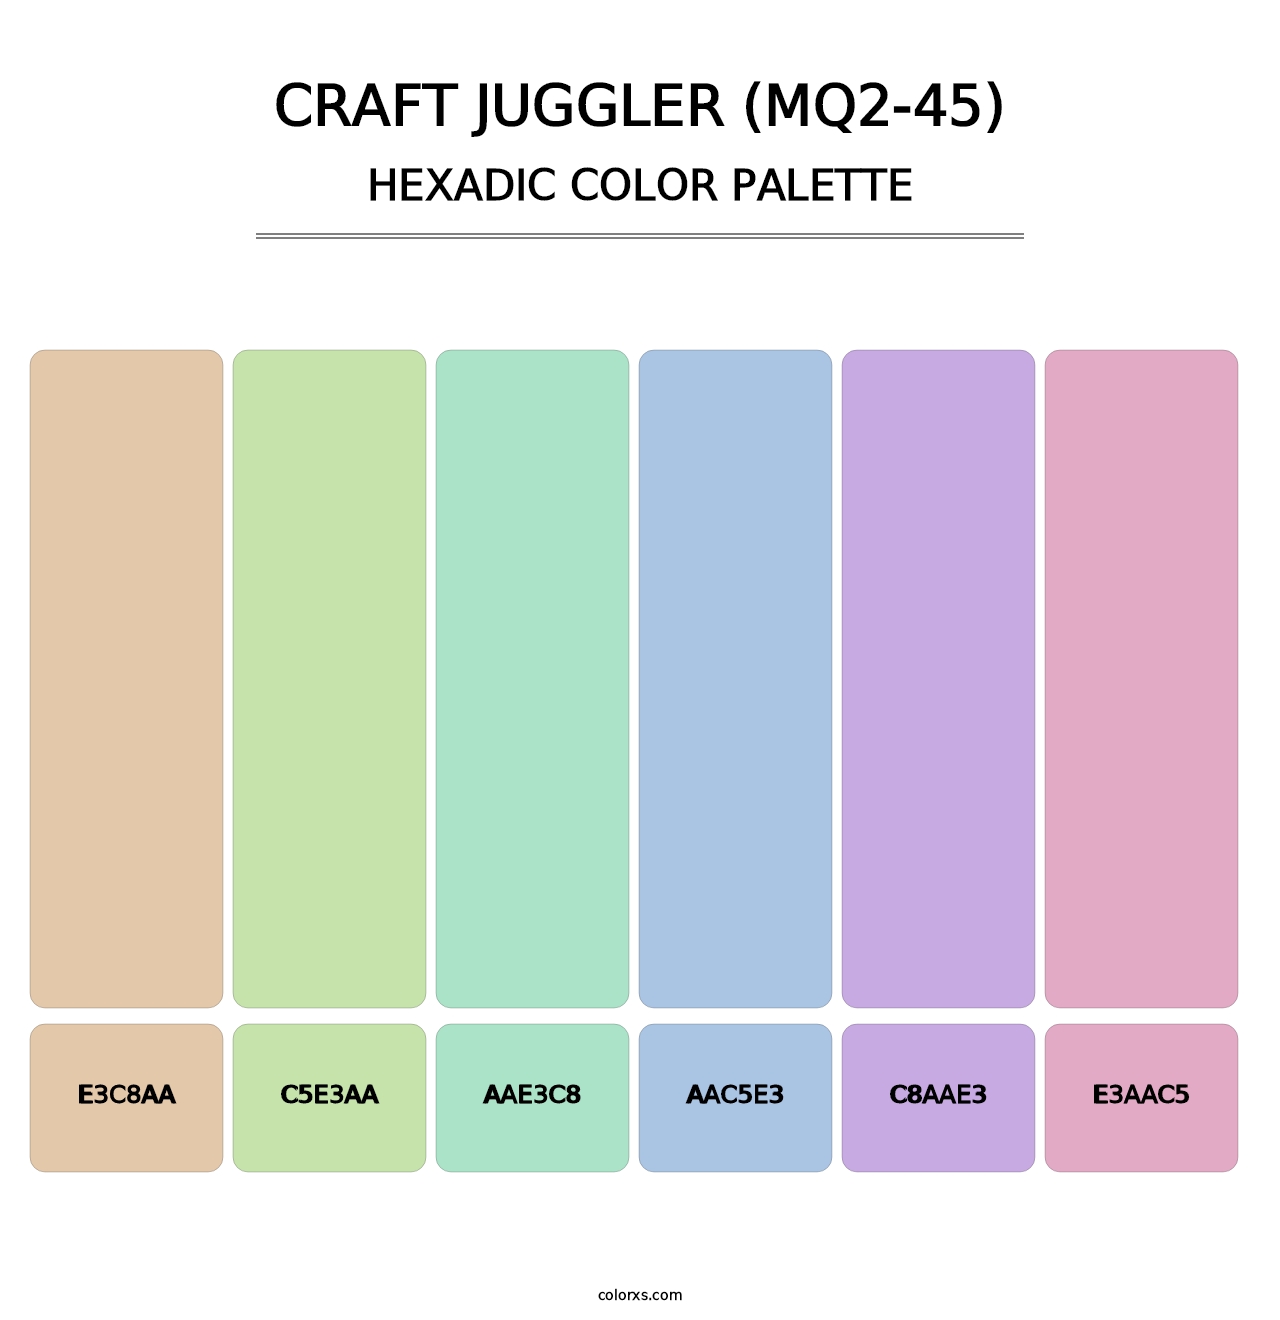 Craft Juggler (MQ2-45) - Hexadic Color Palette